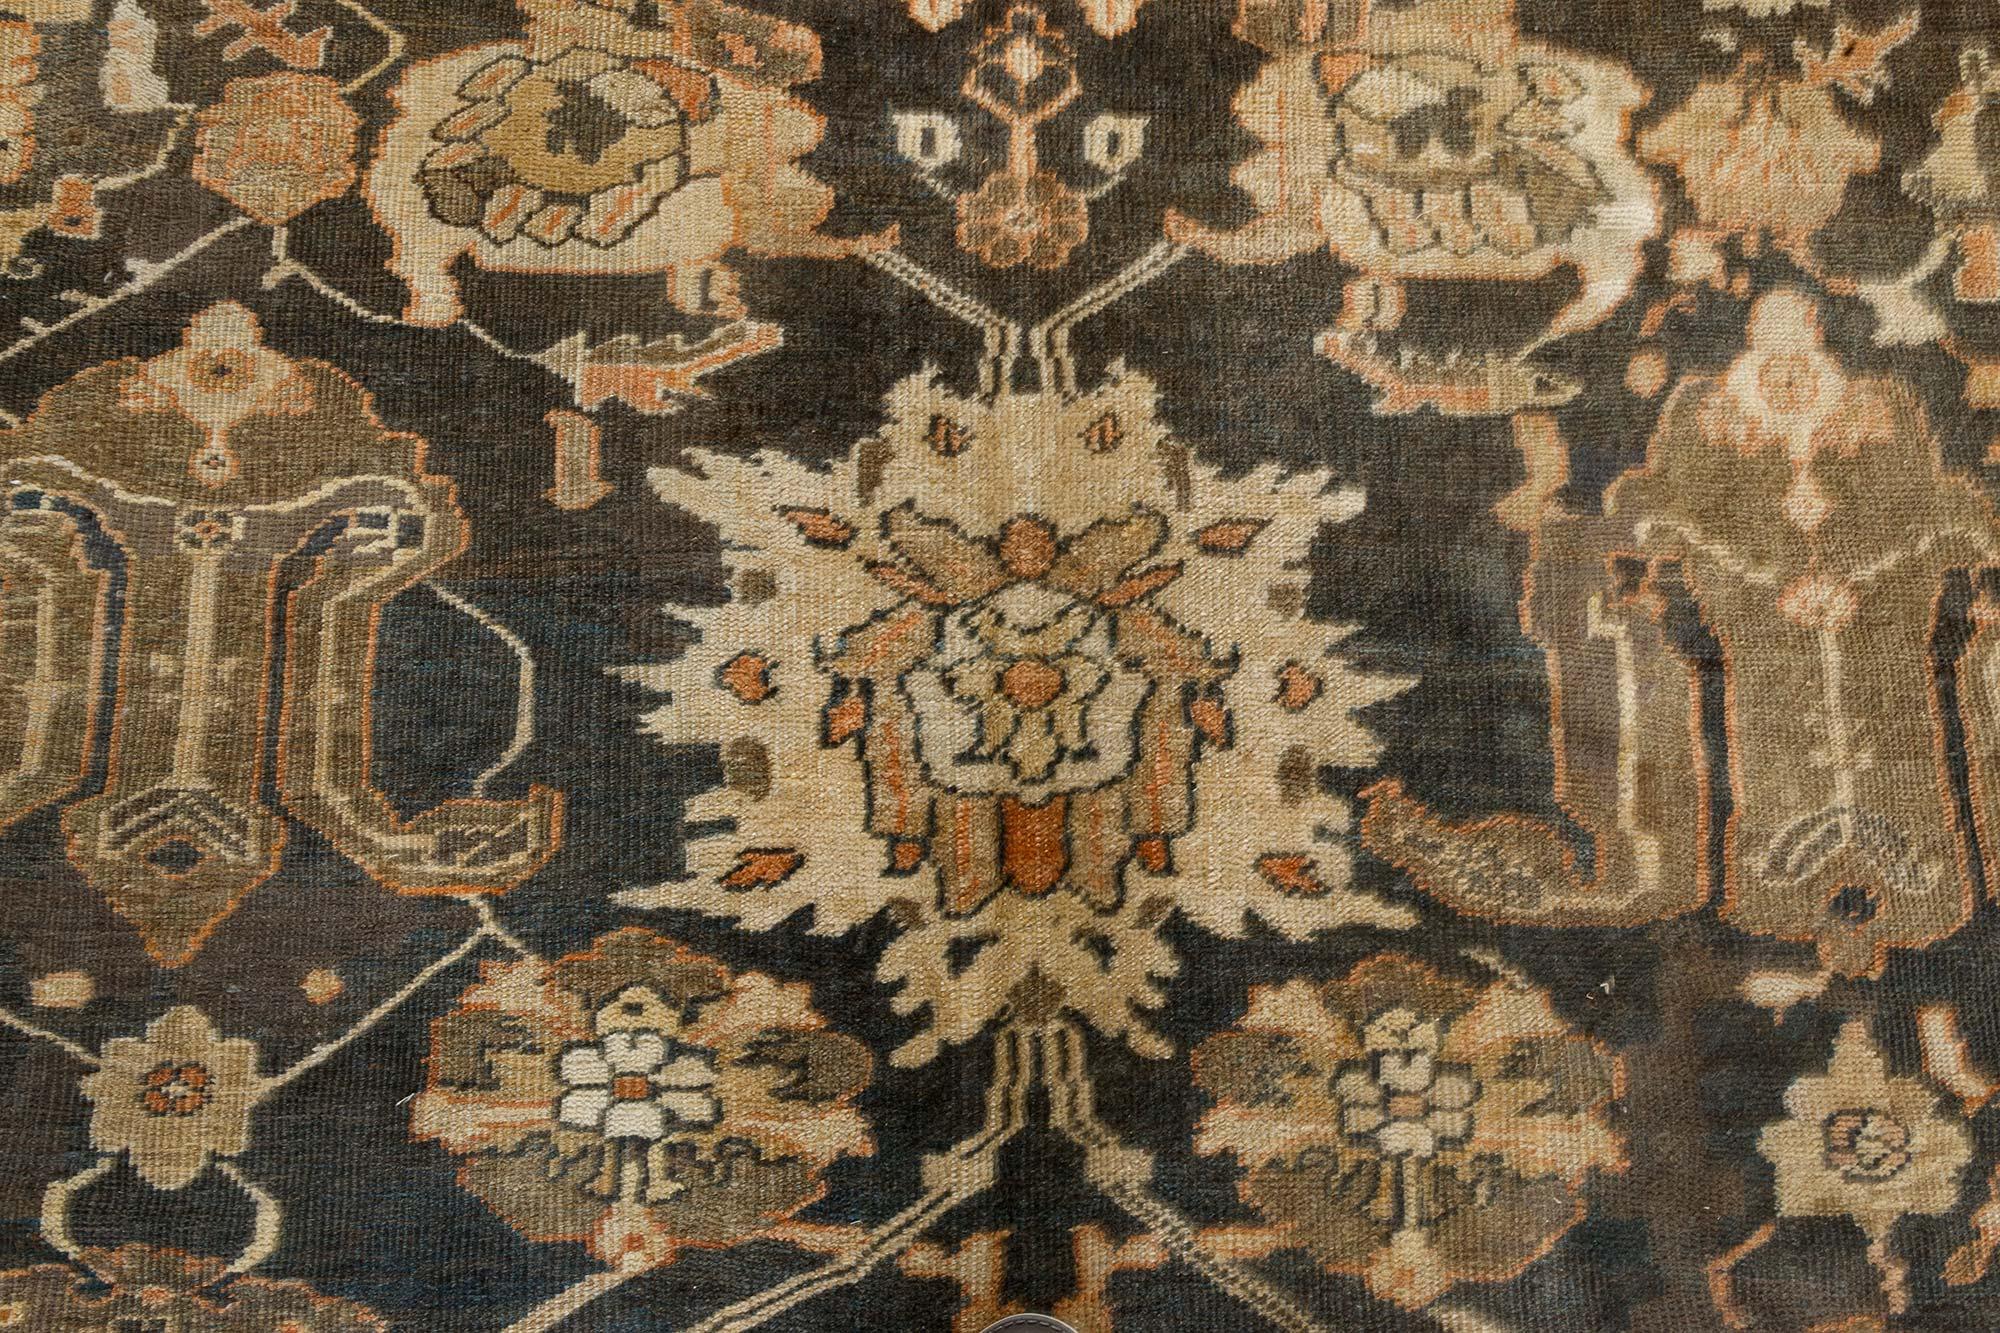 19th century Persian Sultanabad handmade wool rug
Size: 11'8